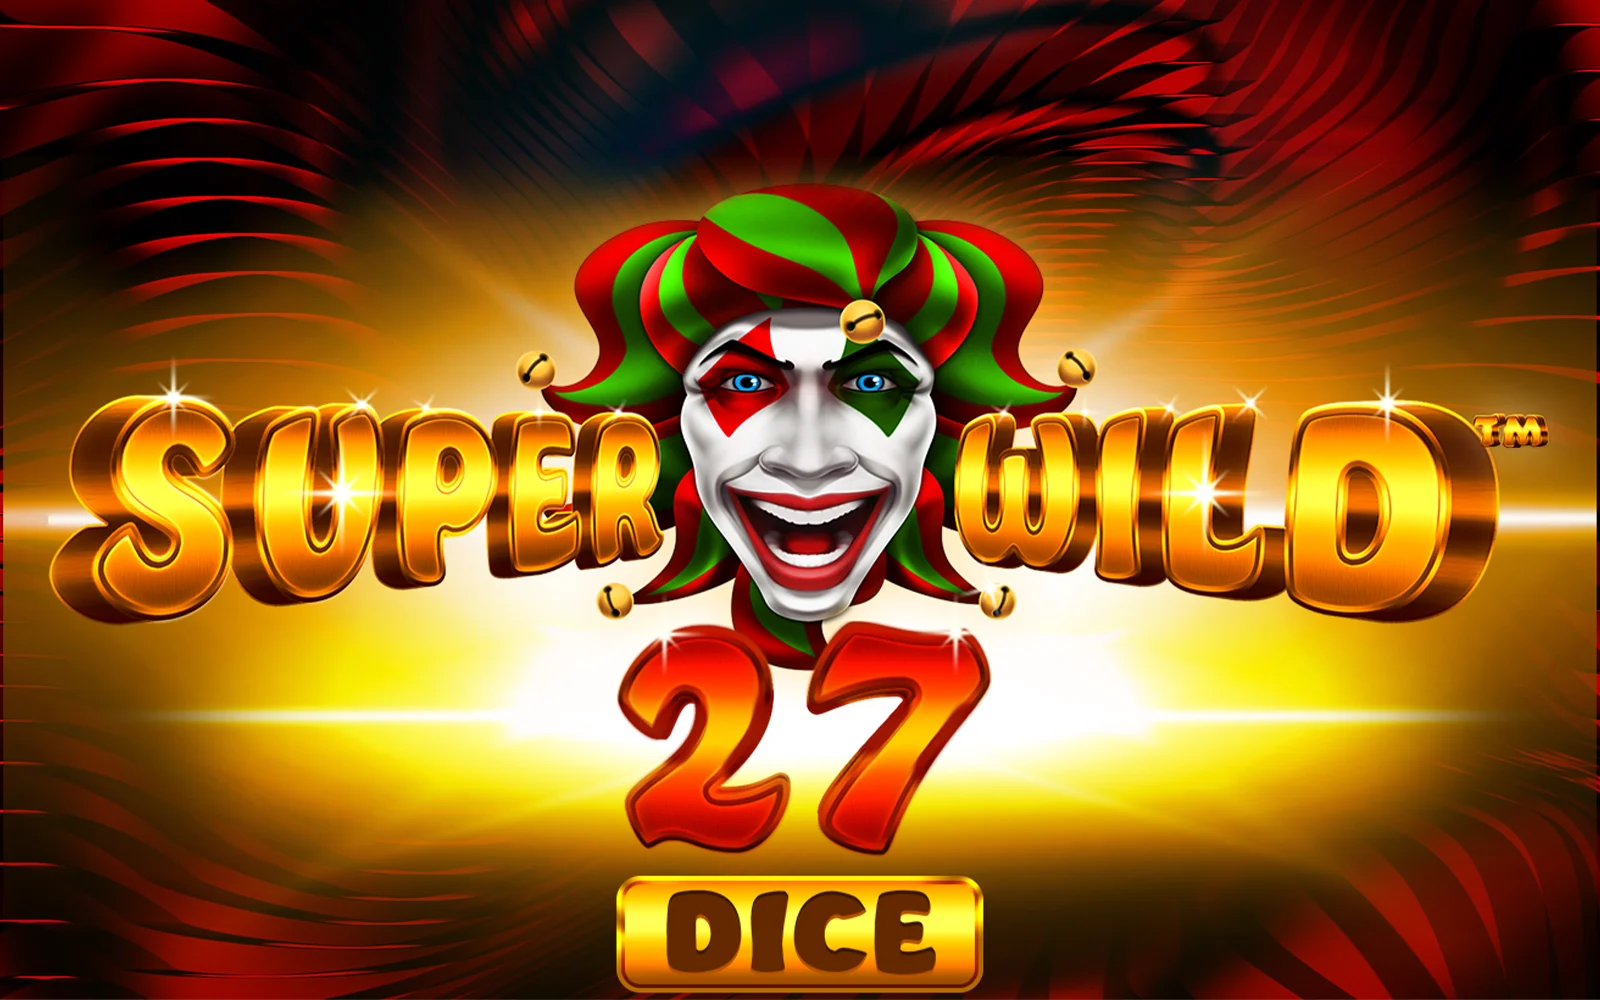 Грайте у Super Wild 27 Dice в онлайн-казино Starcasino.be